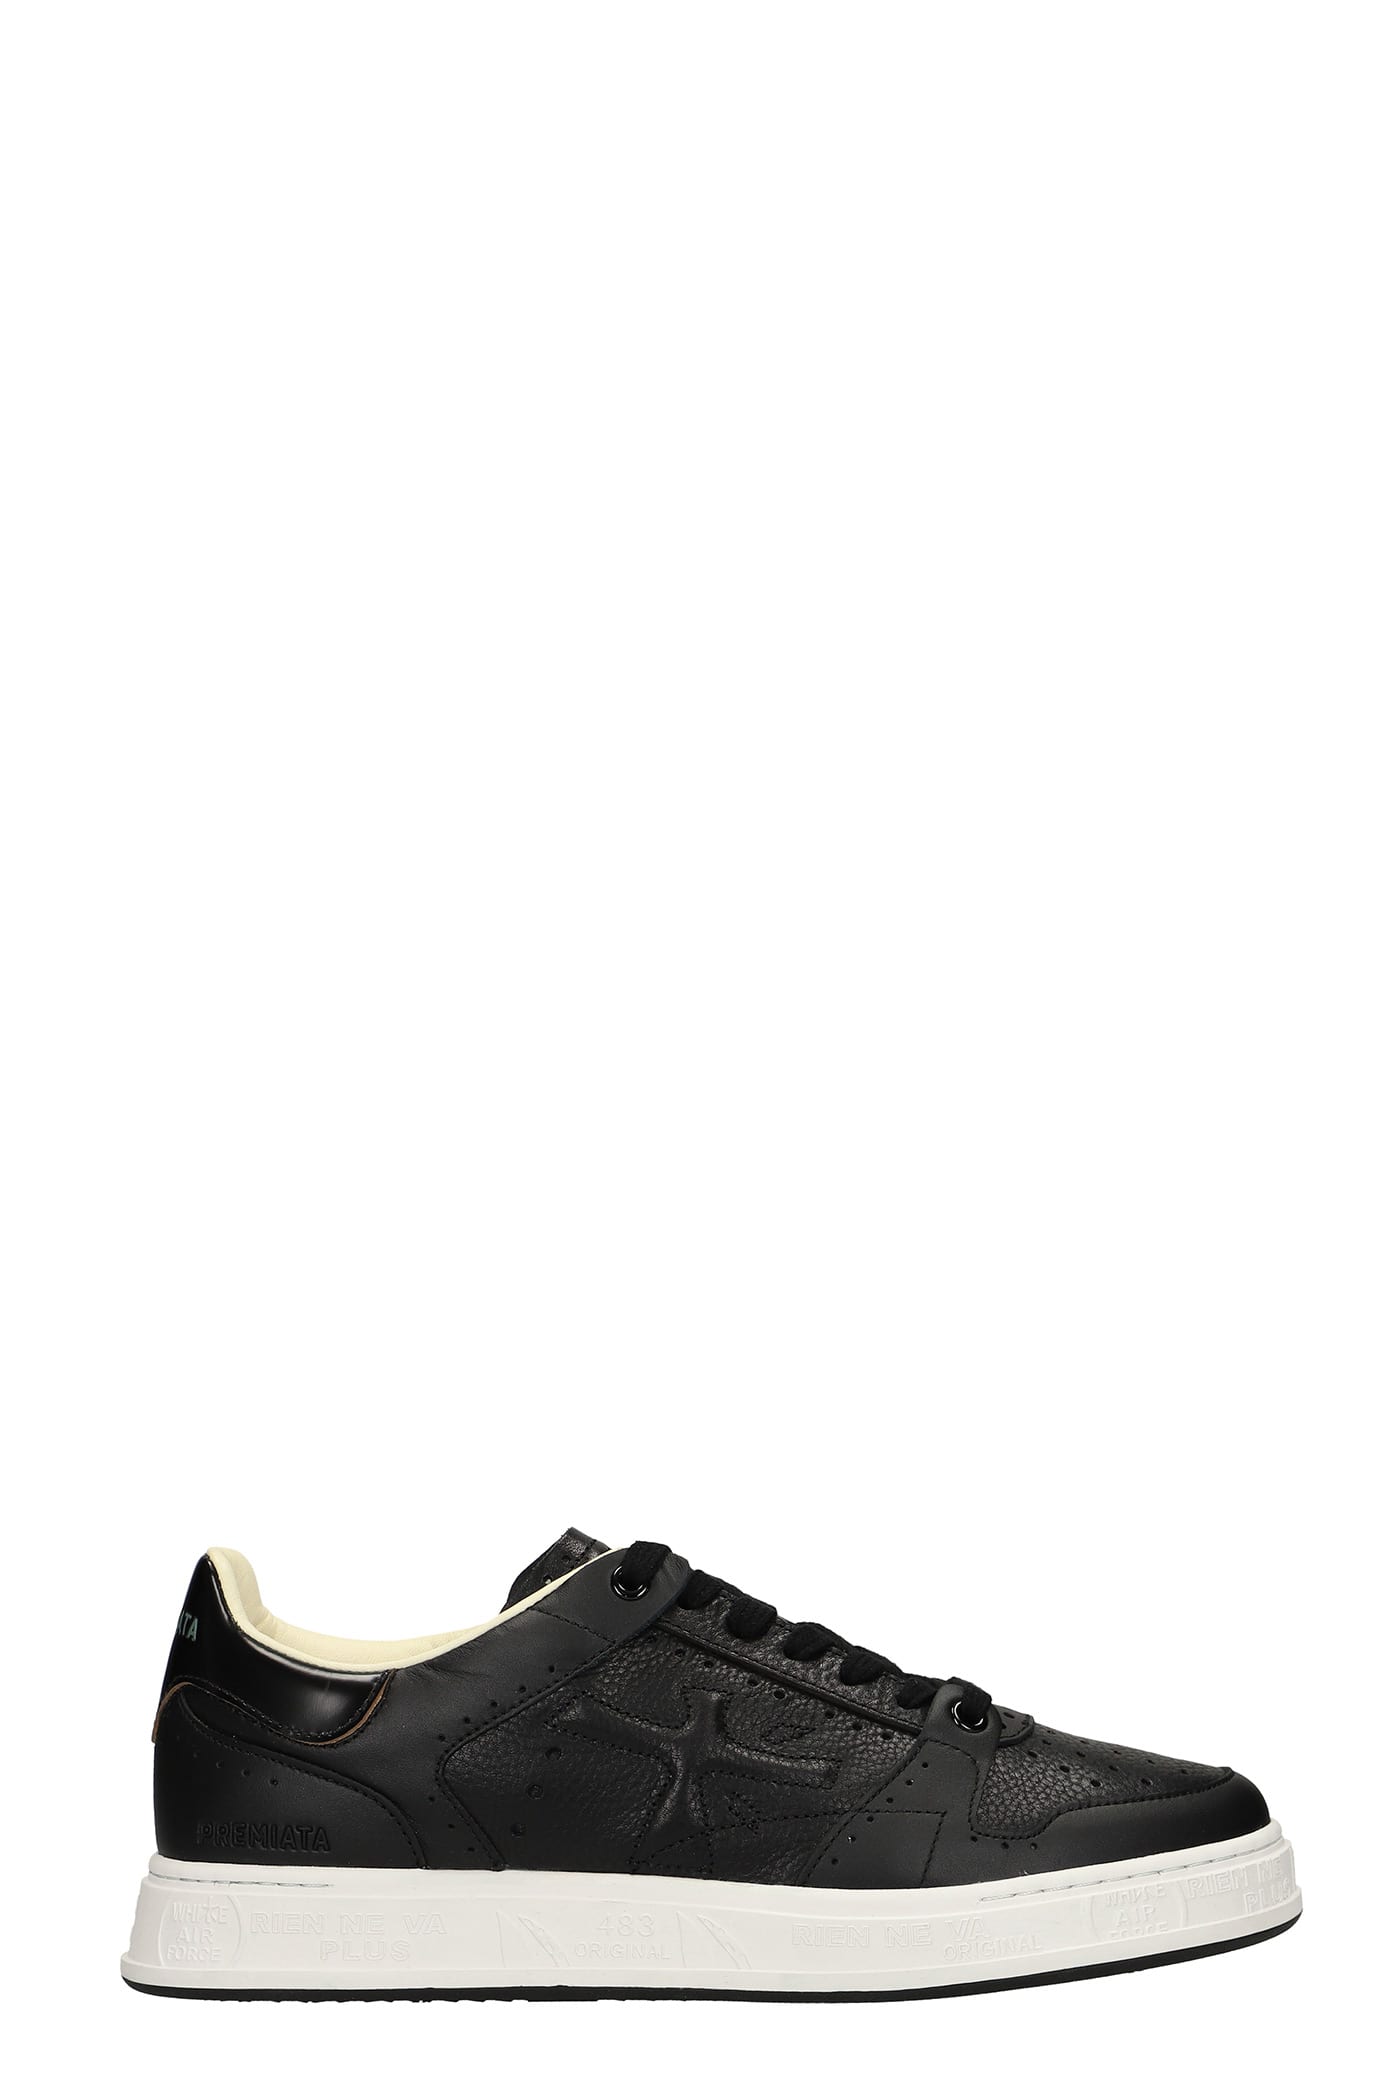 Premiata Quinn Sneakers In Black Leather